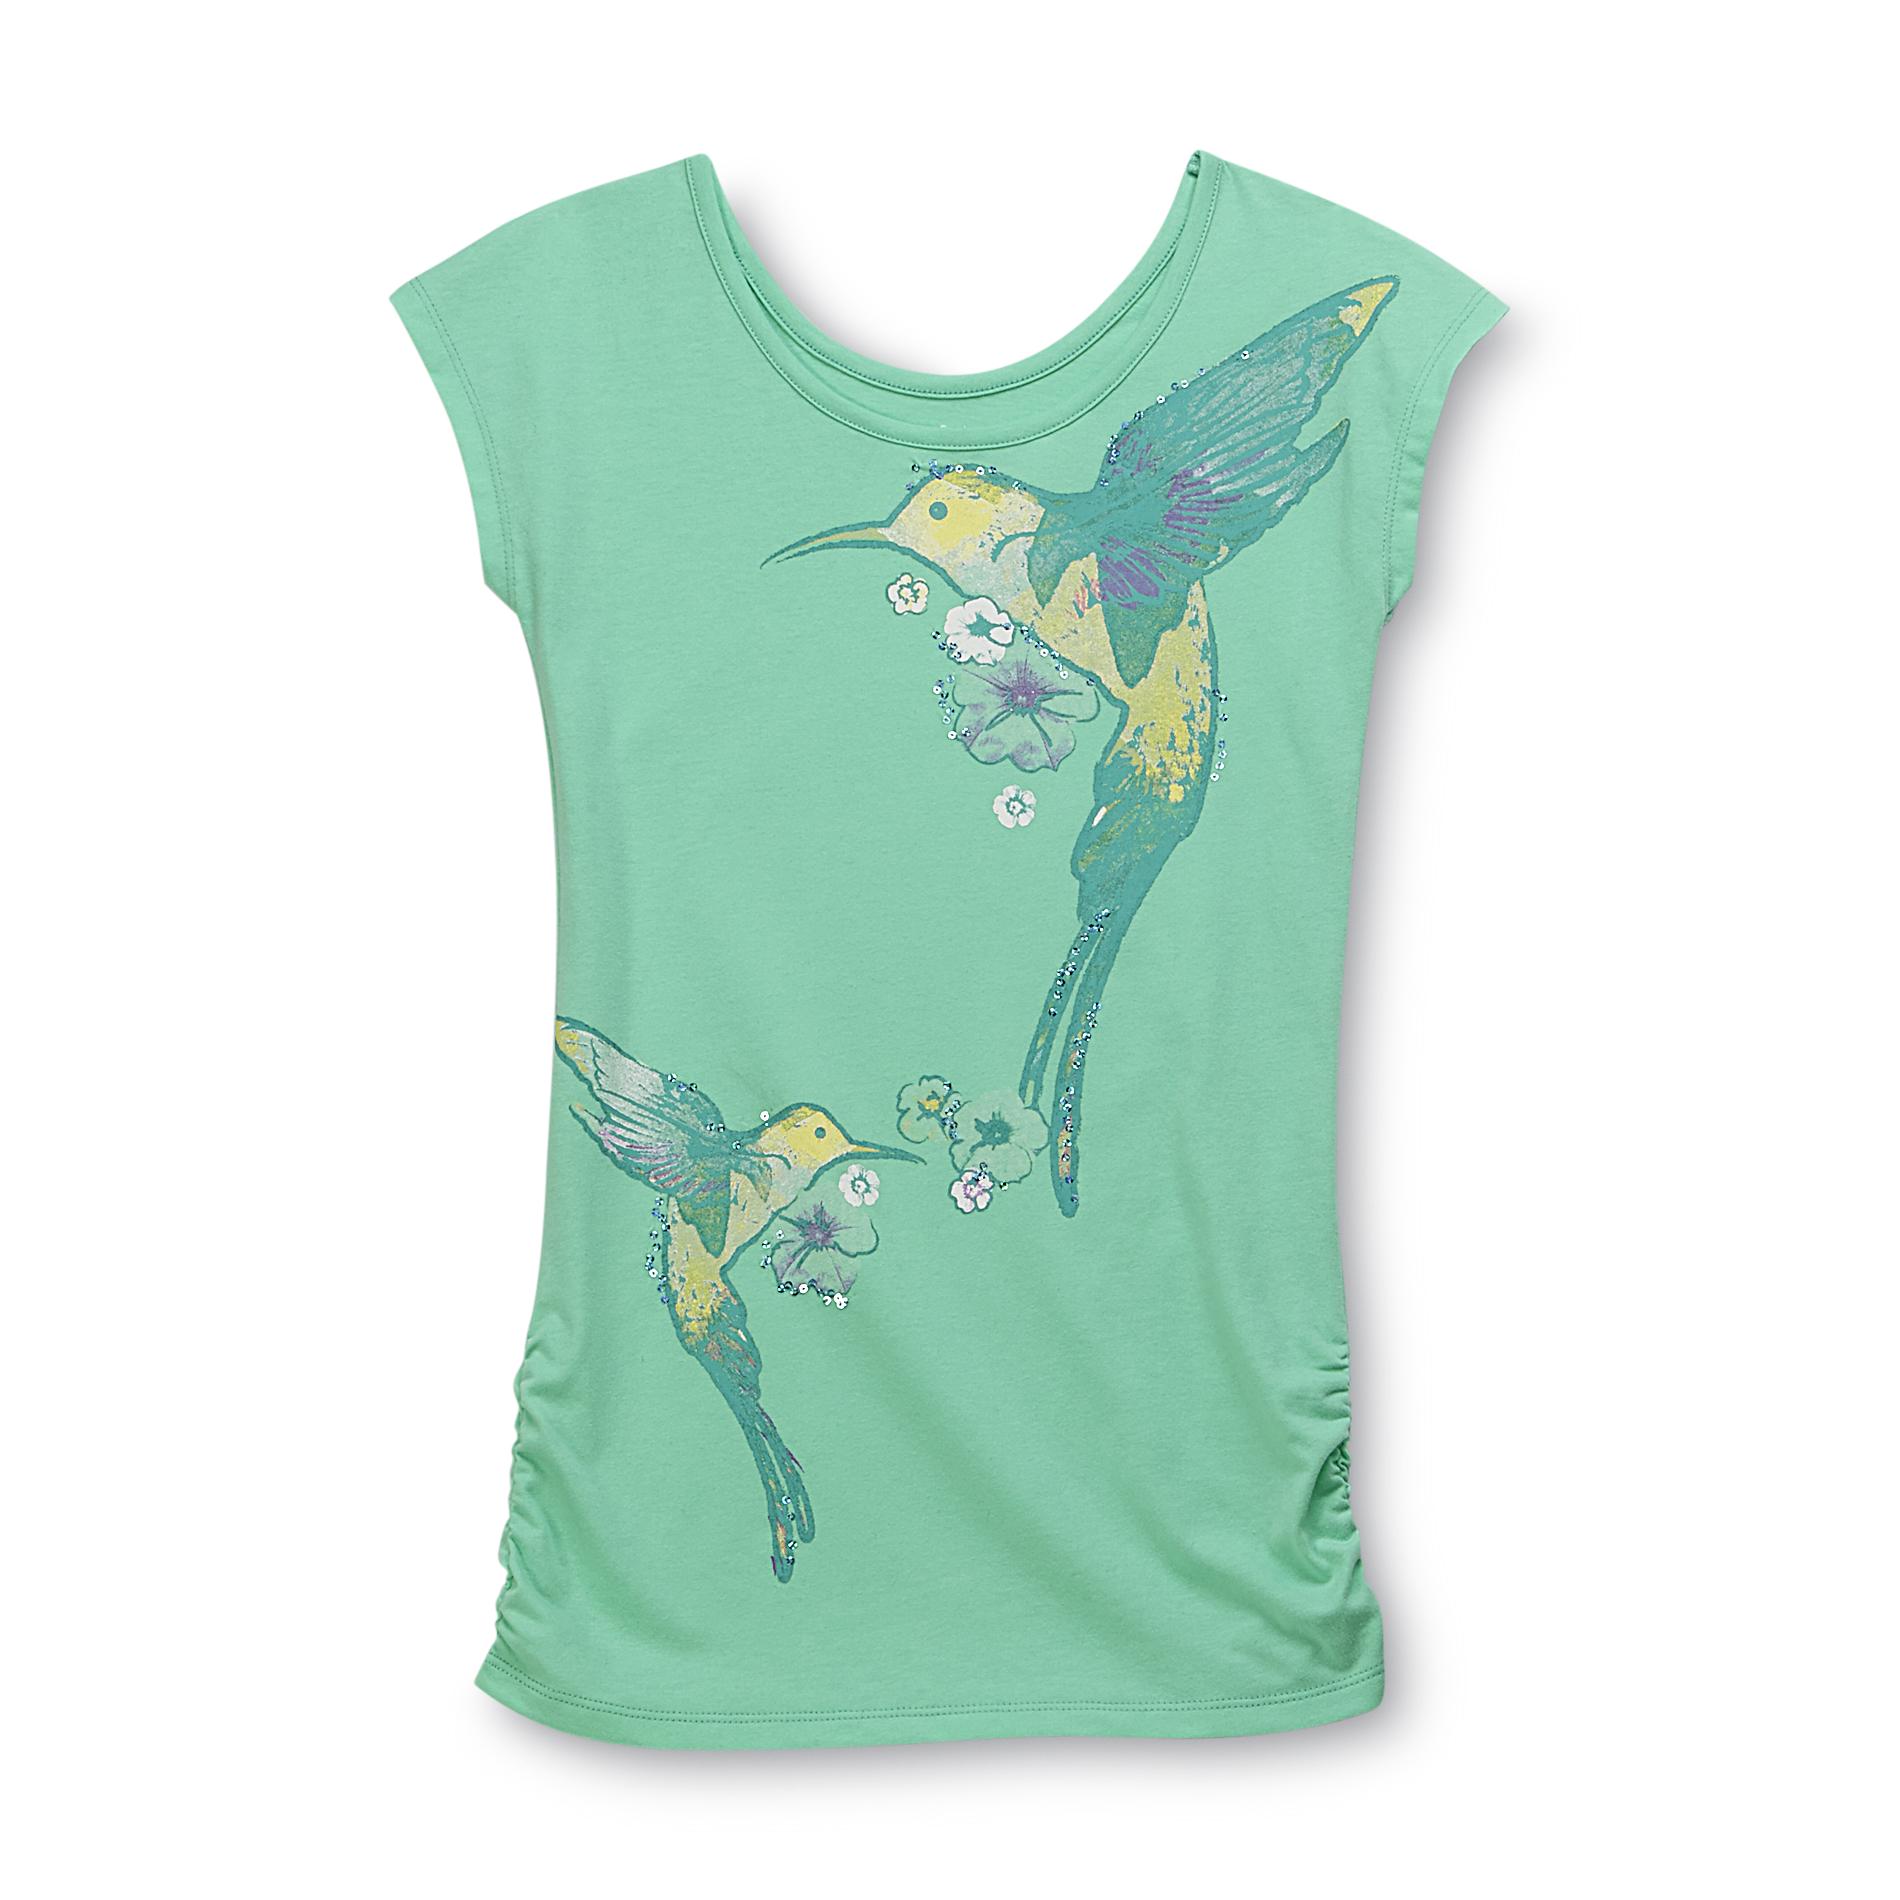 Basic Editions Girl's Graphic Tunic Top - Hummingbird